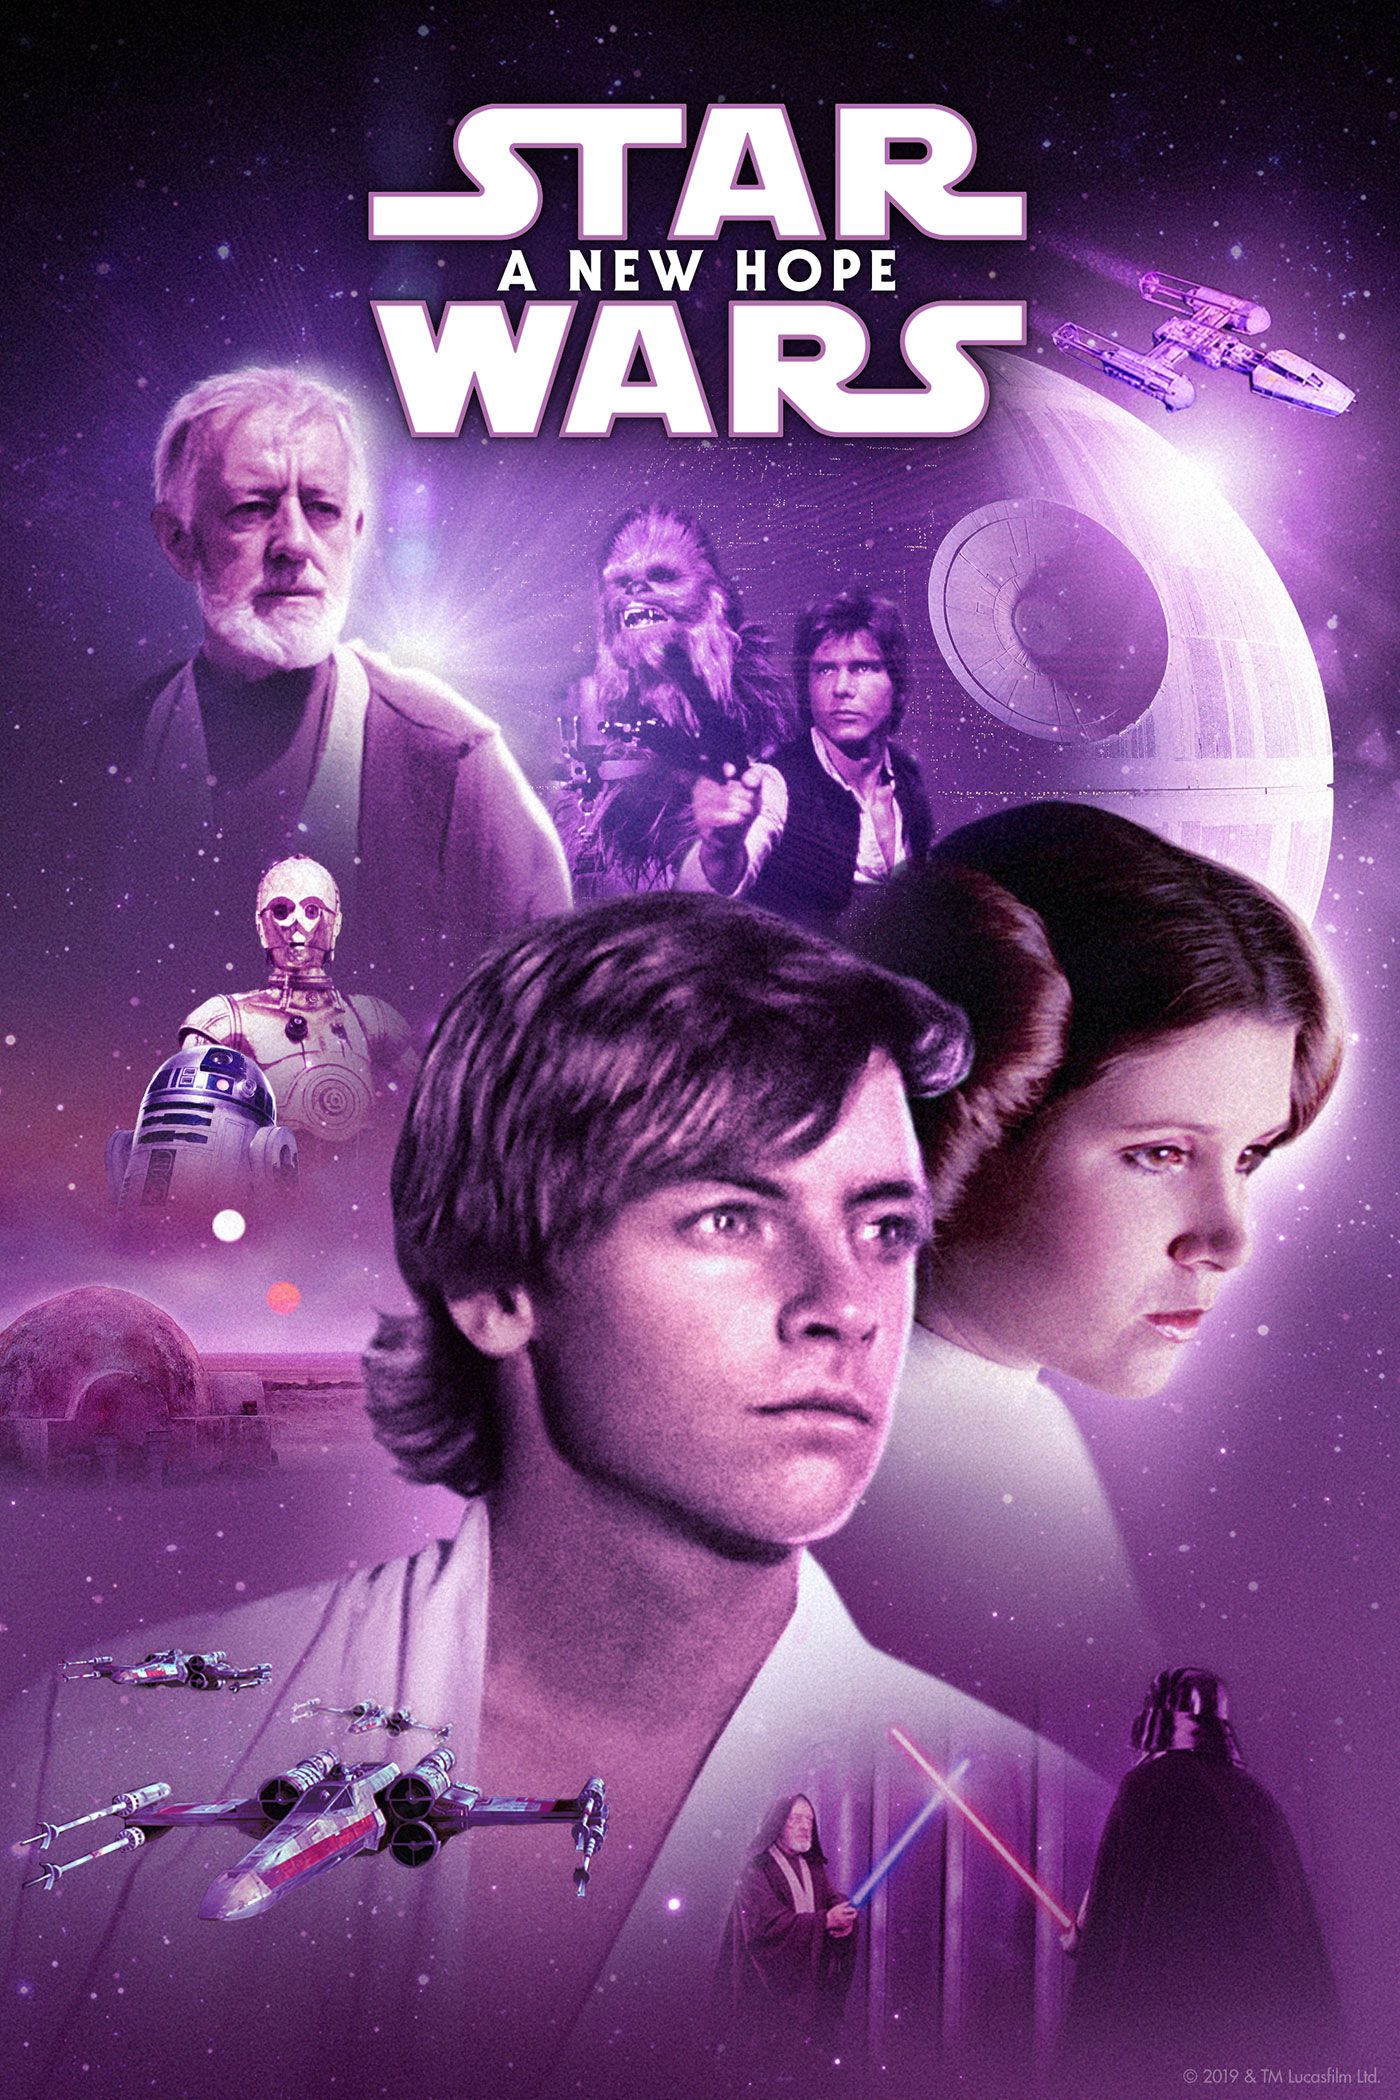 star wars 1977 full movie online free putlocker.is